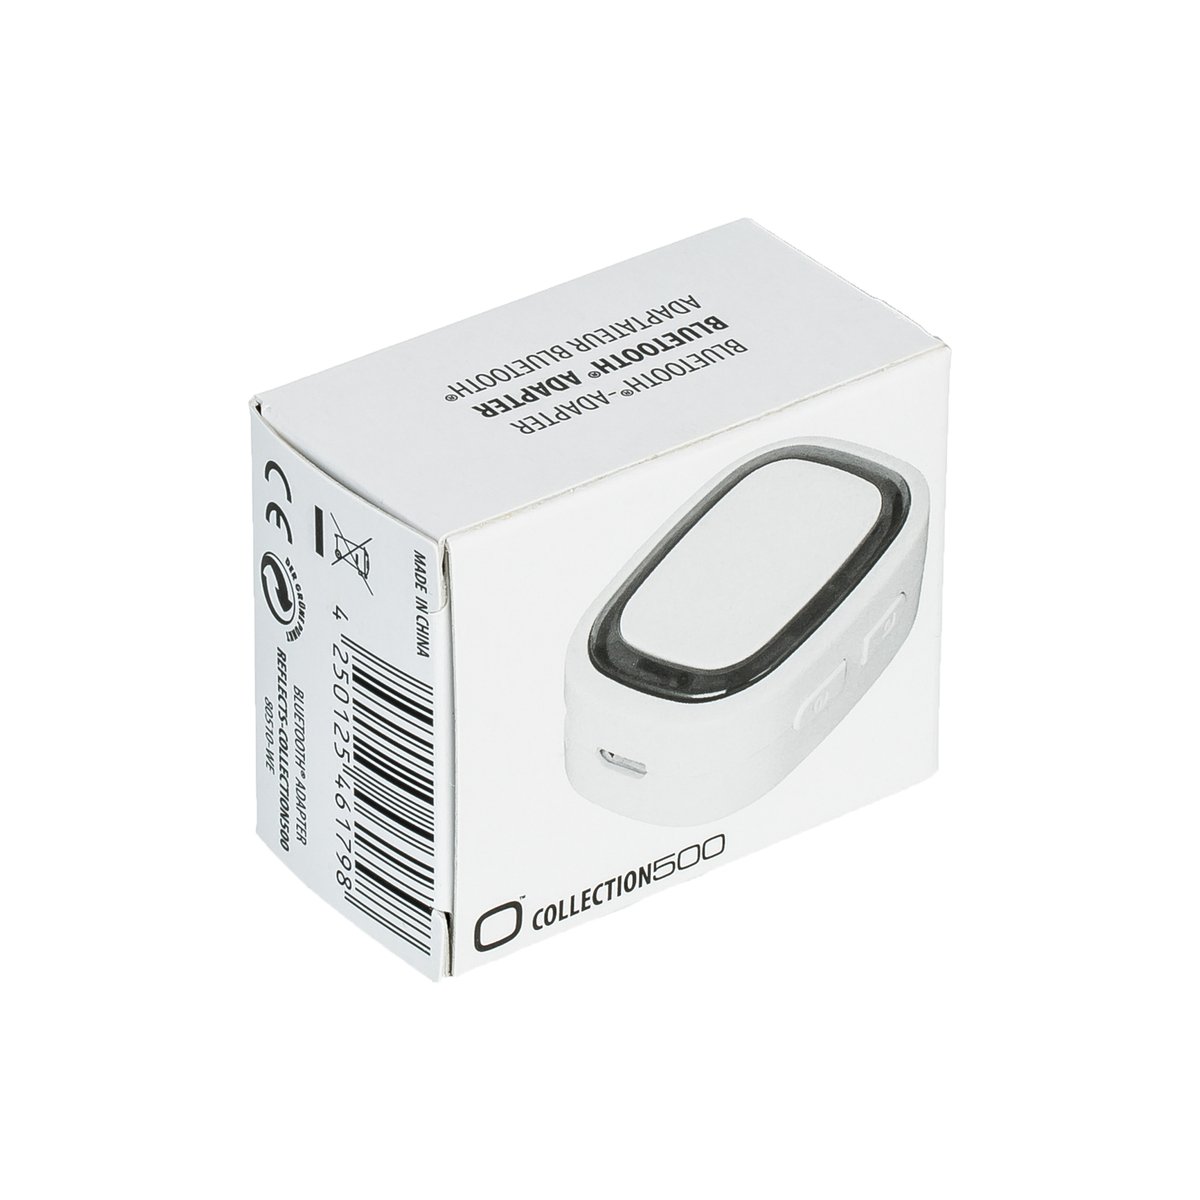 Bluetooth®-Adapter COLLECTION 500 orange